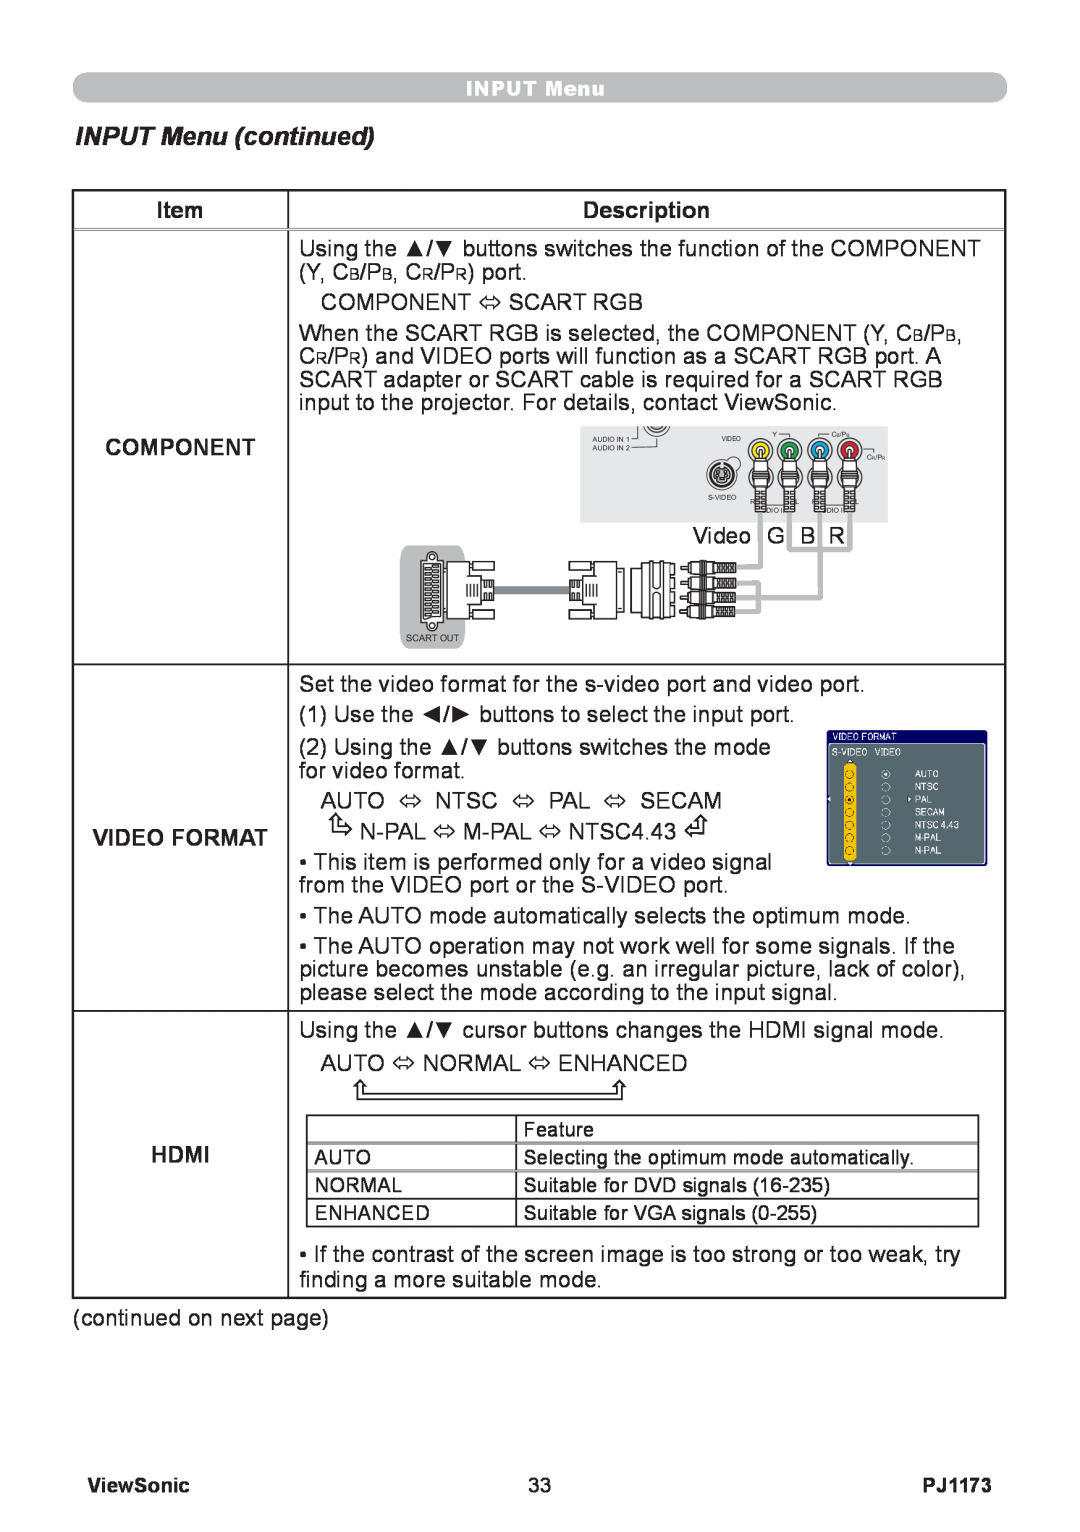 ViewSonic VS12109, PJ1173 warranty INPUT Menu continued, Item, Description, Component, Video Format, Hdmi 